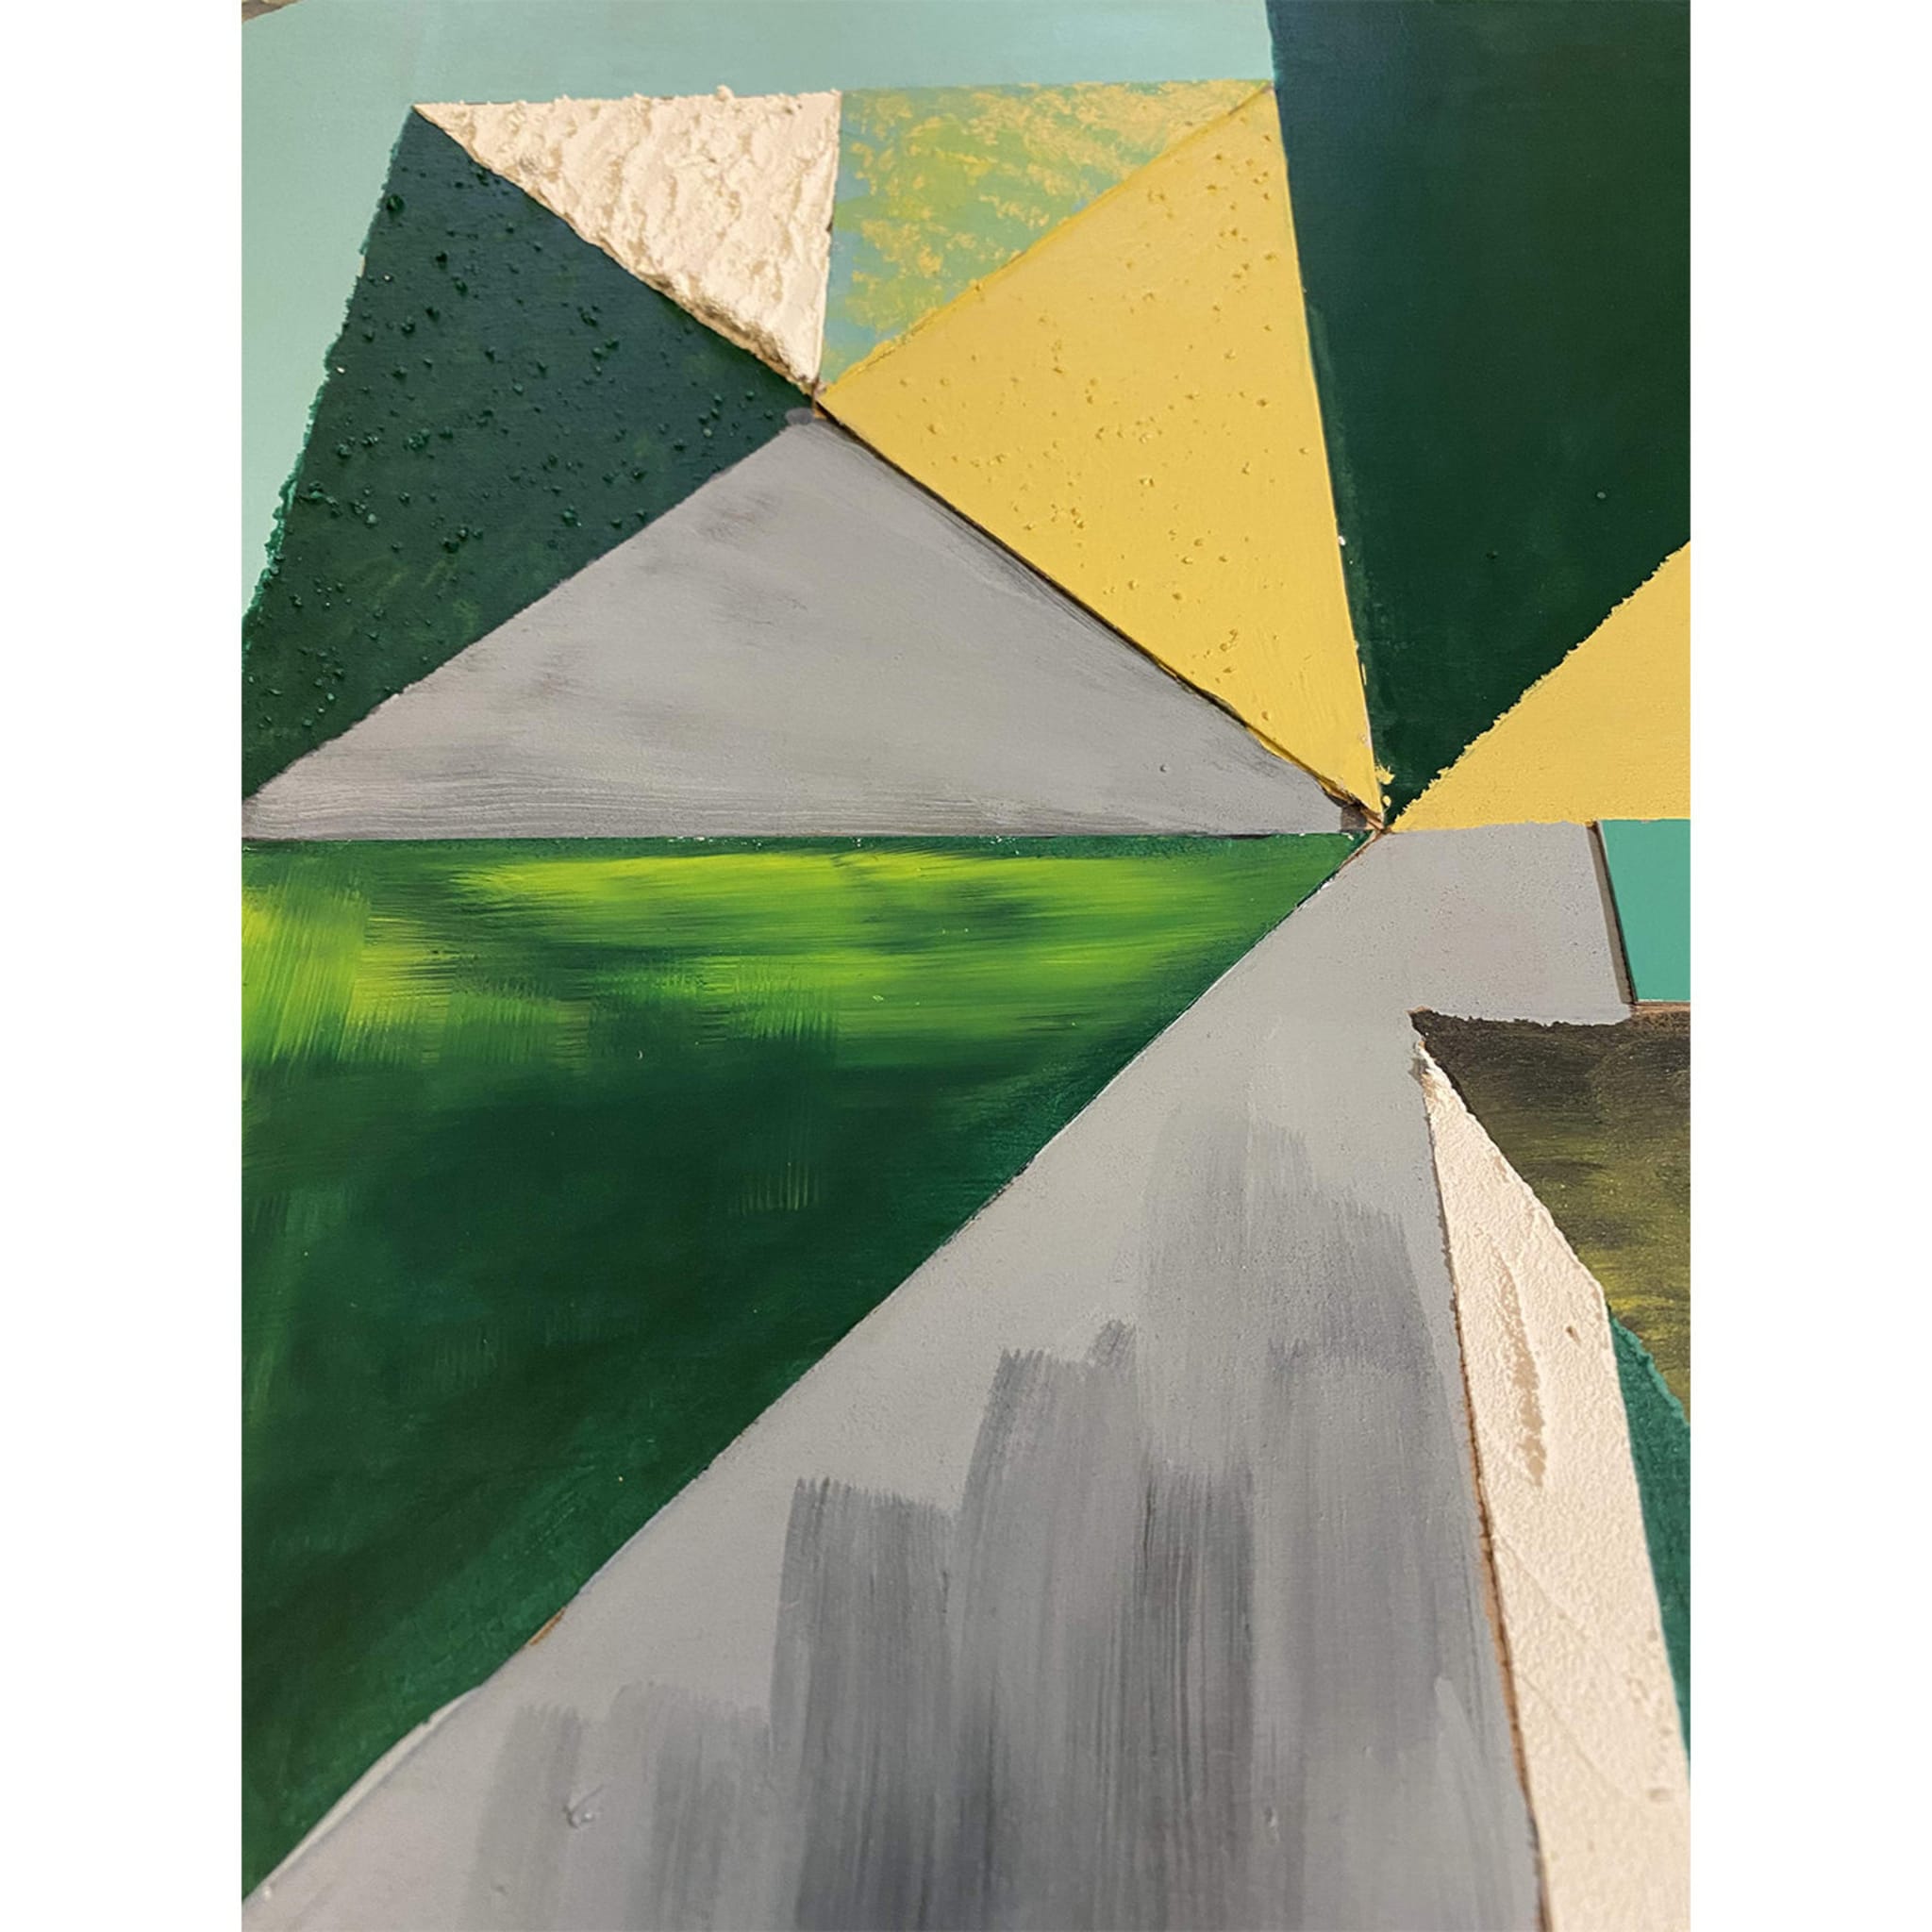 Geometrie Tre Wall Panel by Mascia Meccani 2019 - Alternative view 3